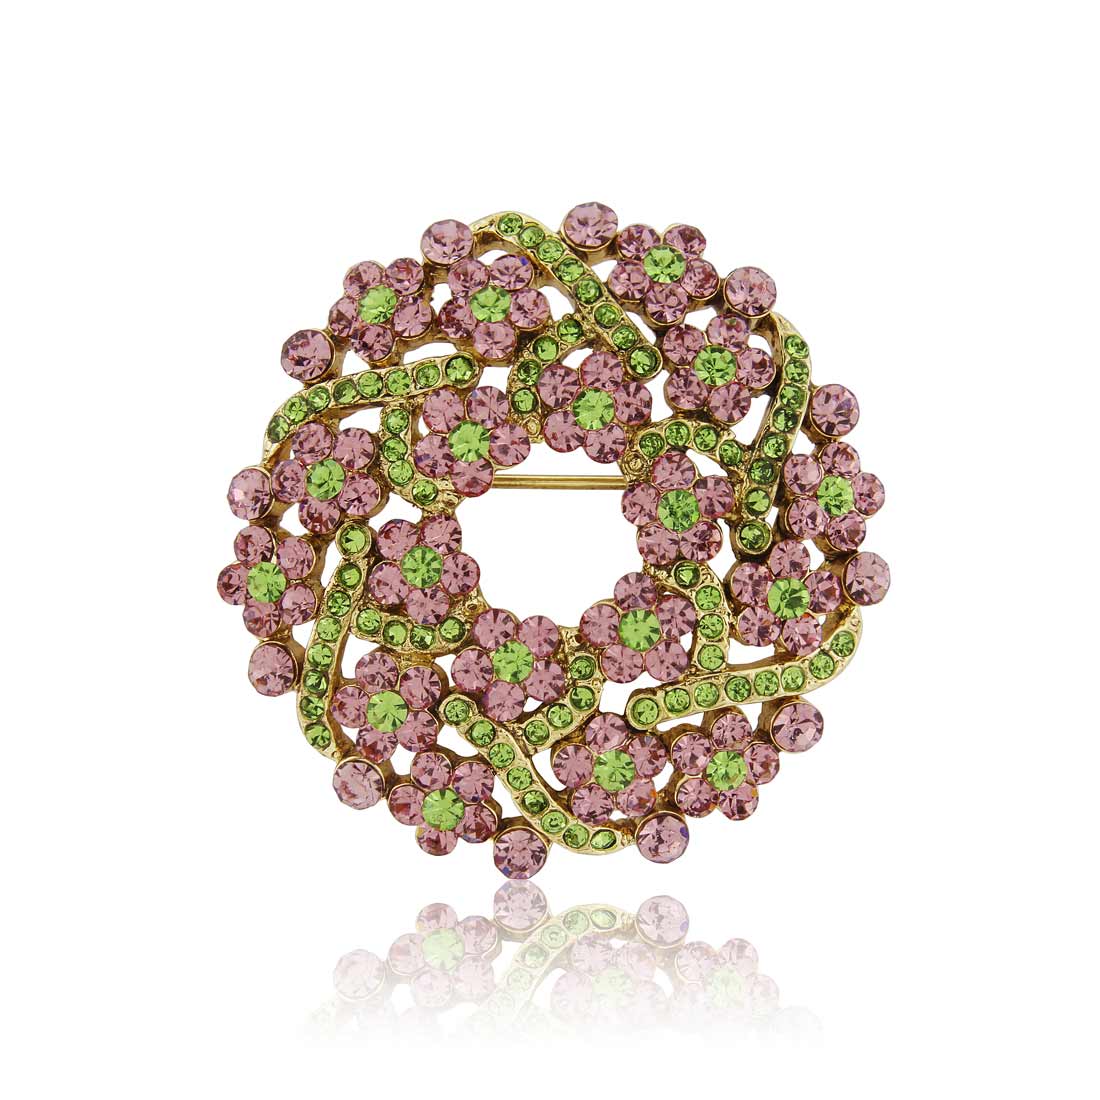 Wreath of Romance Pink & Green Crystal Brooch